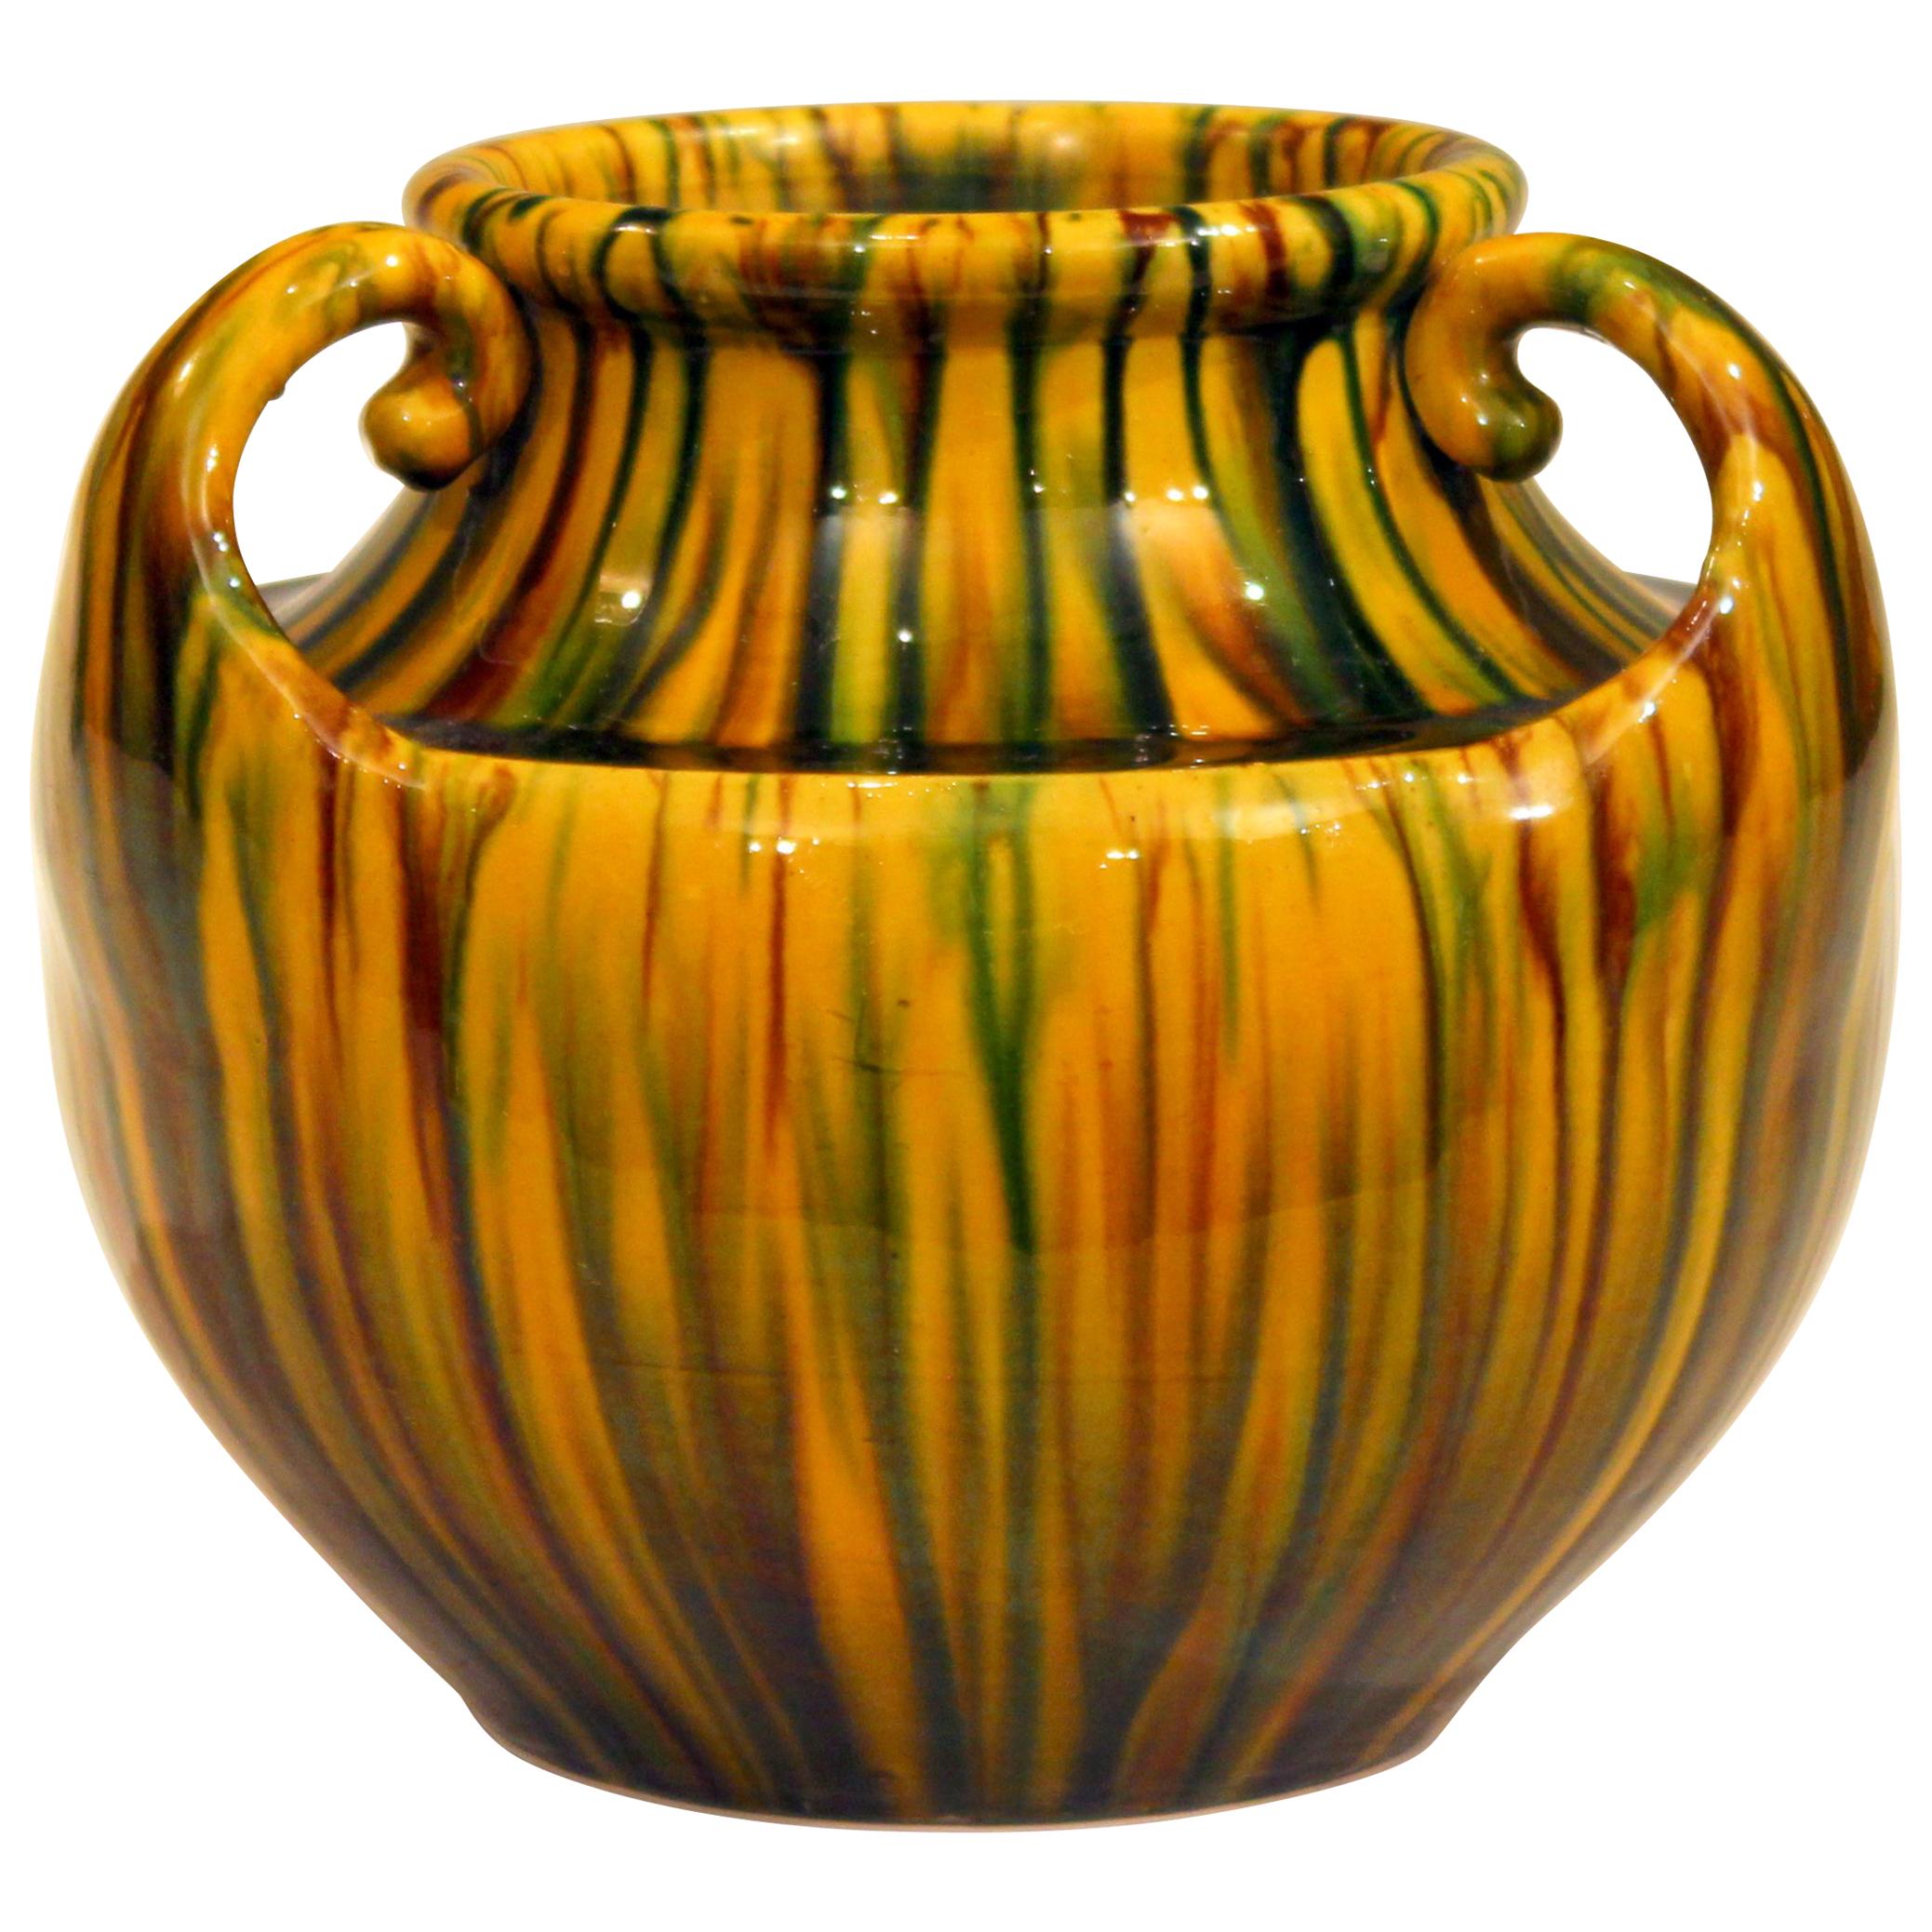 Awaji Pottery Art Deco Japanese Vintage Studio Yellow Vase Flambe Glaze